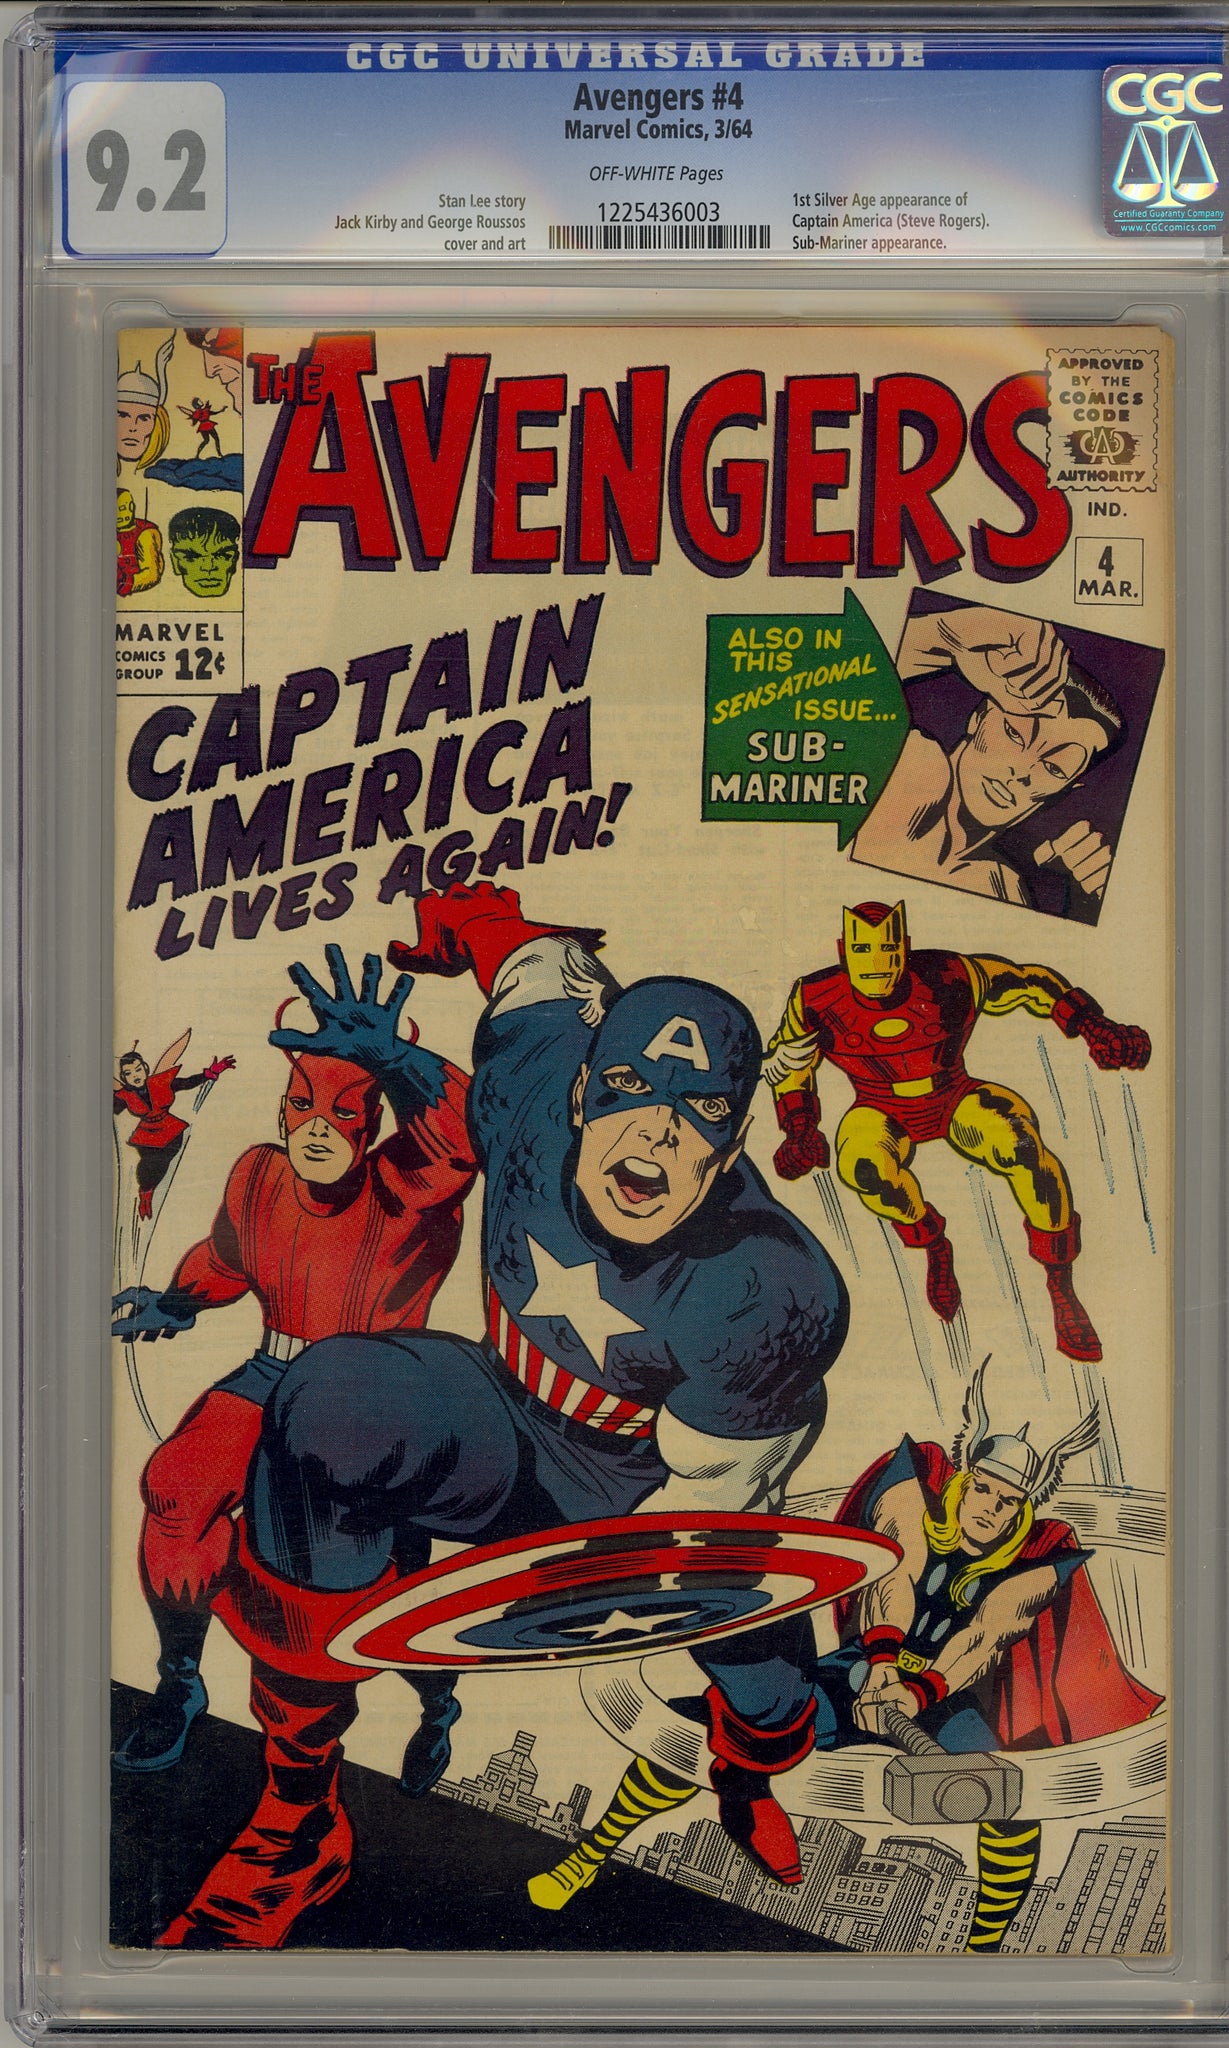 Avengers #4 (1964) Captain America, Sub-Mariner